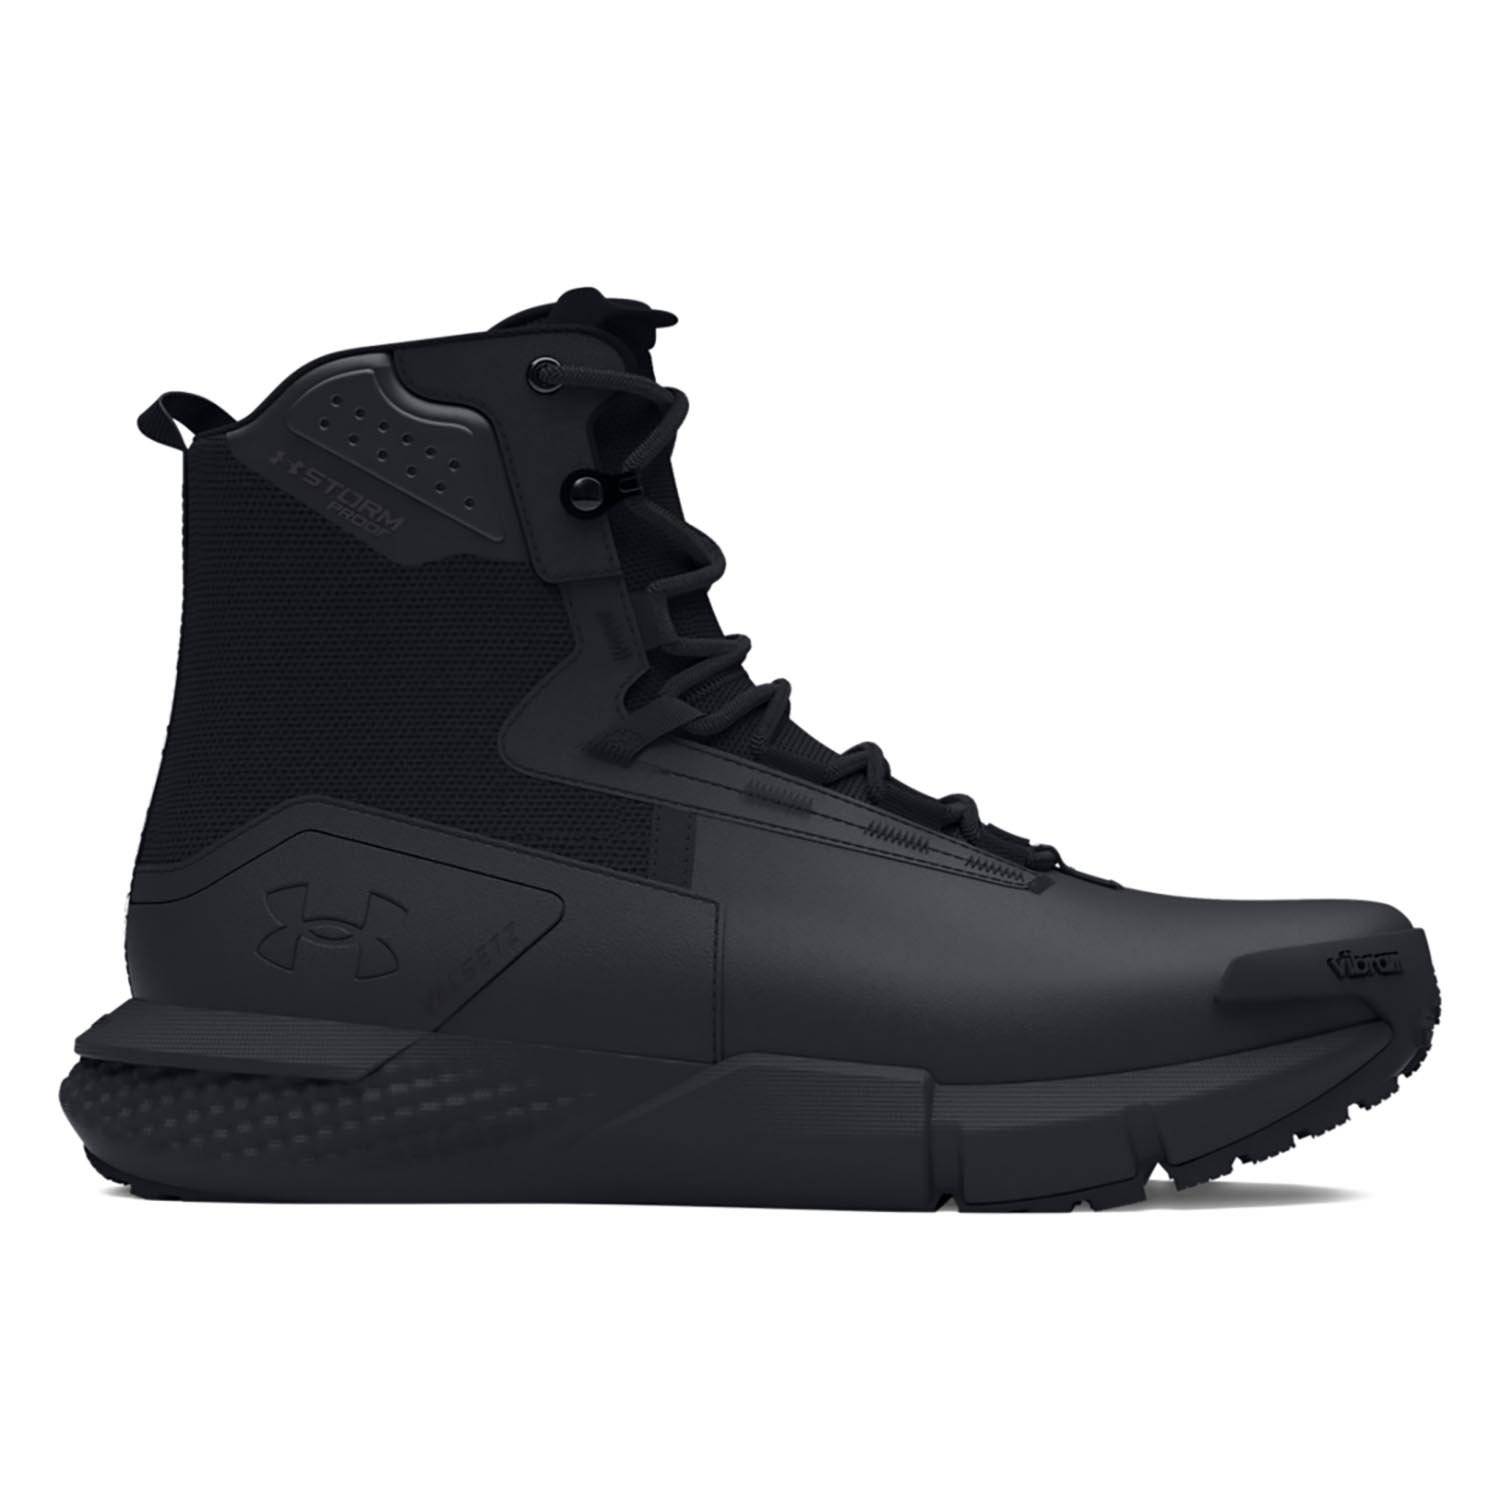 Under Armour Men's UA Micro G Valsetz Mid Leather Waterproof Boots